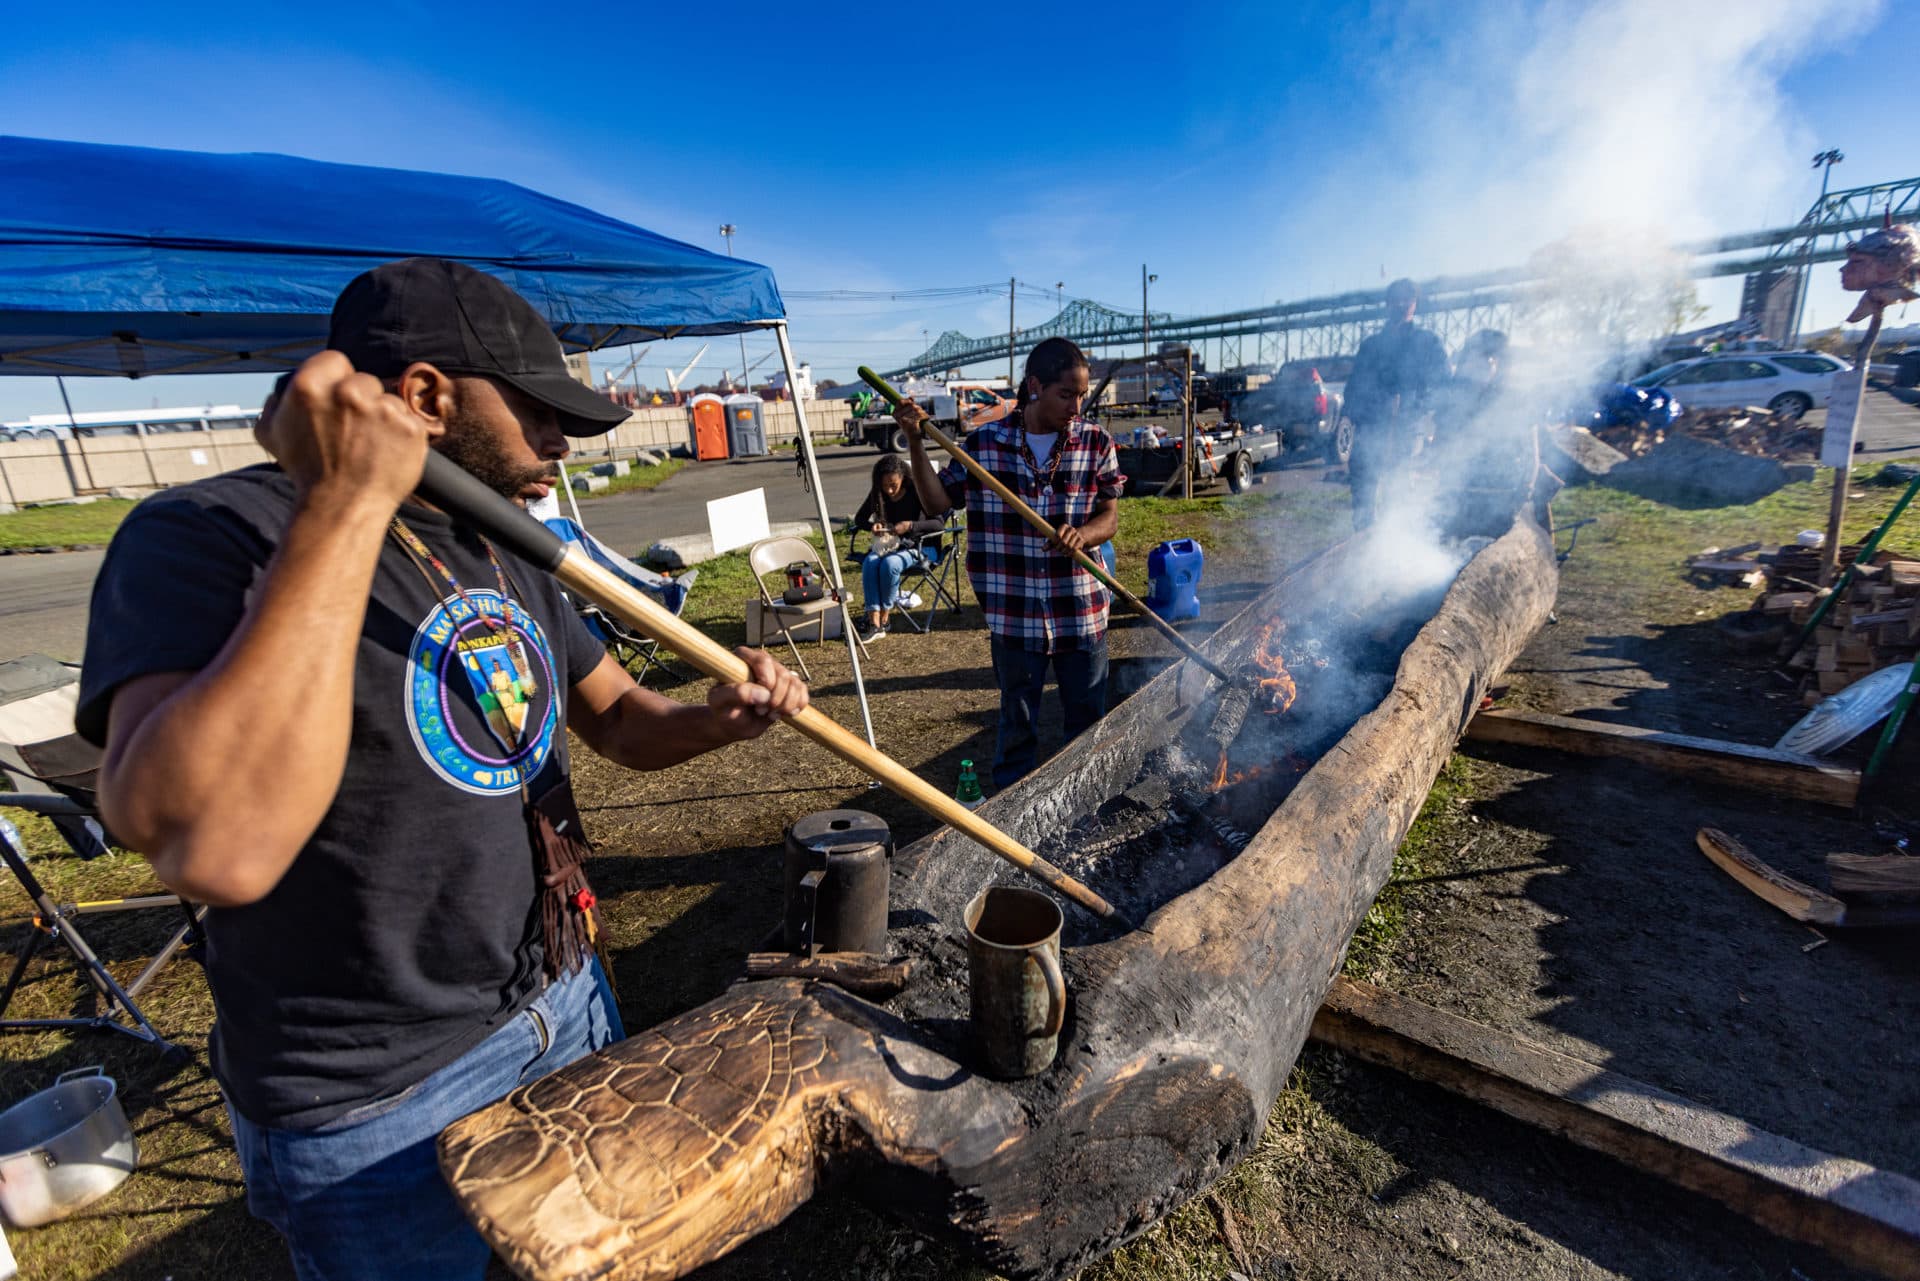 Thomas Green, Indigenous artist and educator of the Massachusett Tribe at Ponkapoag, left, rakes hot coals while burning a traditional mishoon. (Jesse Costa/WBUR)